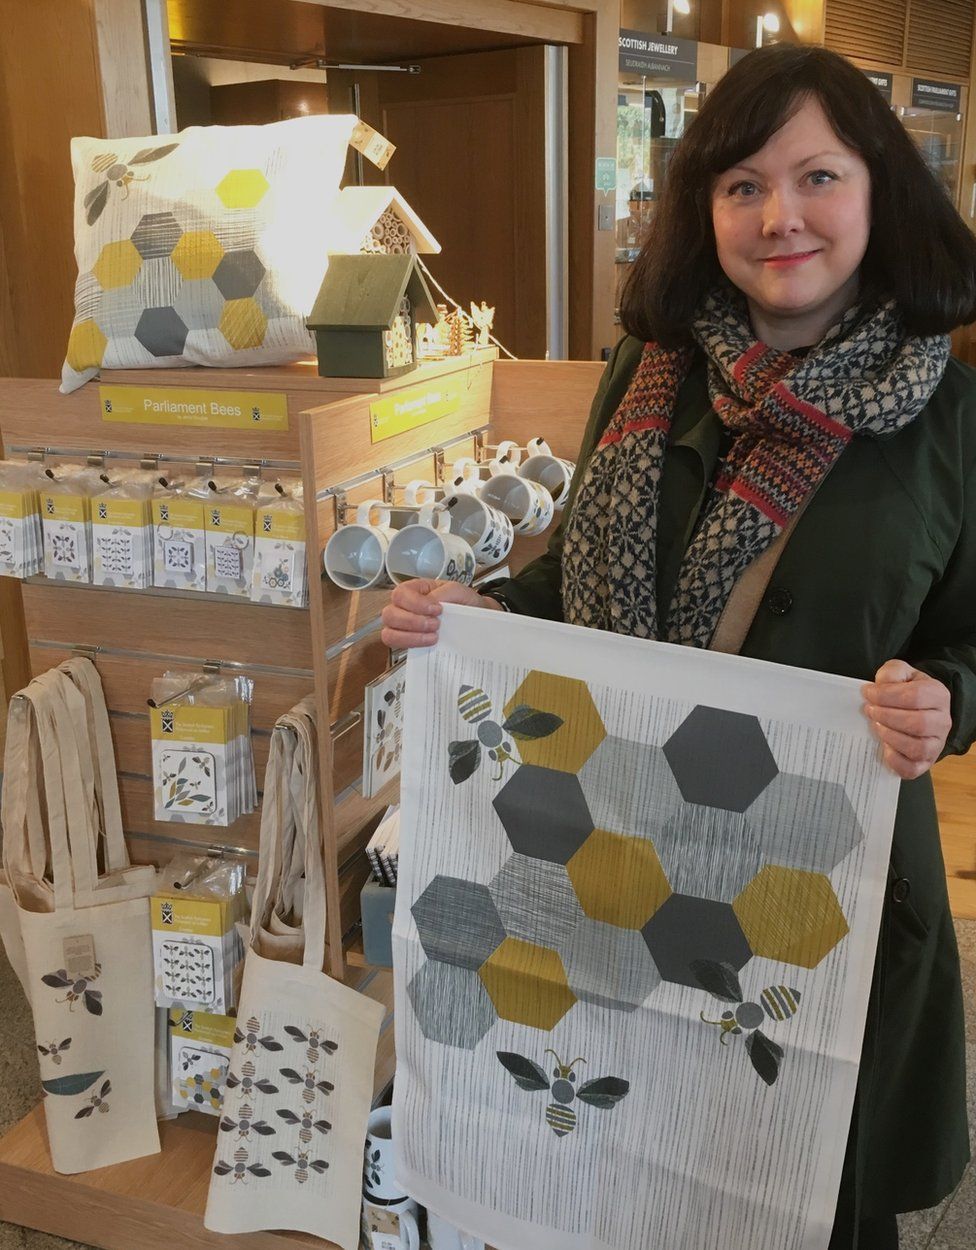 Jenni Douglas holding merchandise featuring her art in the Scottish Parliament shop